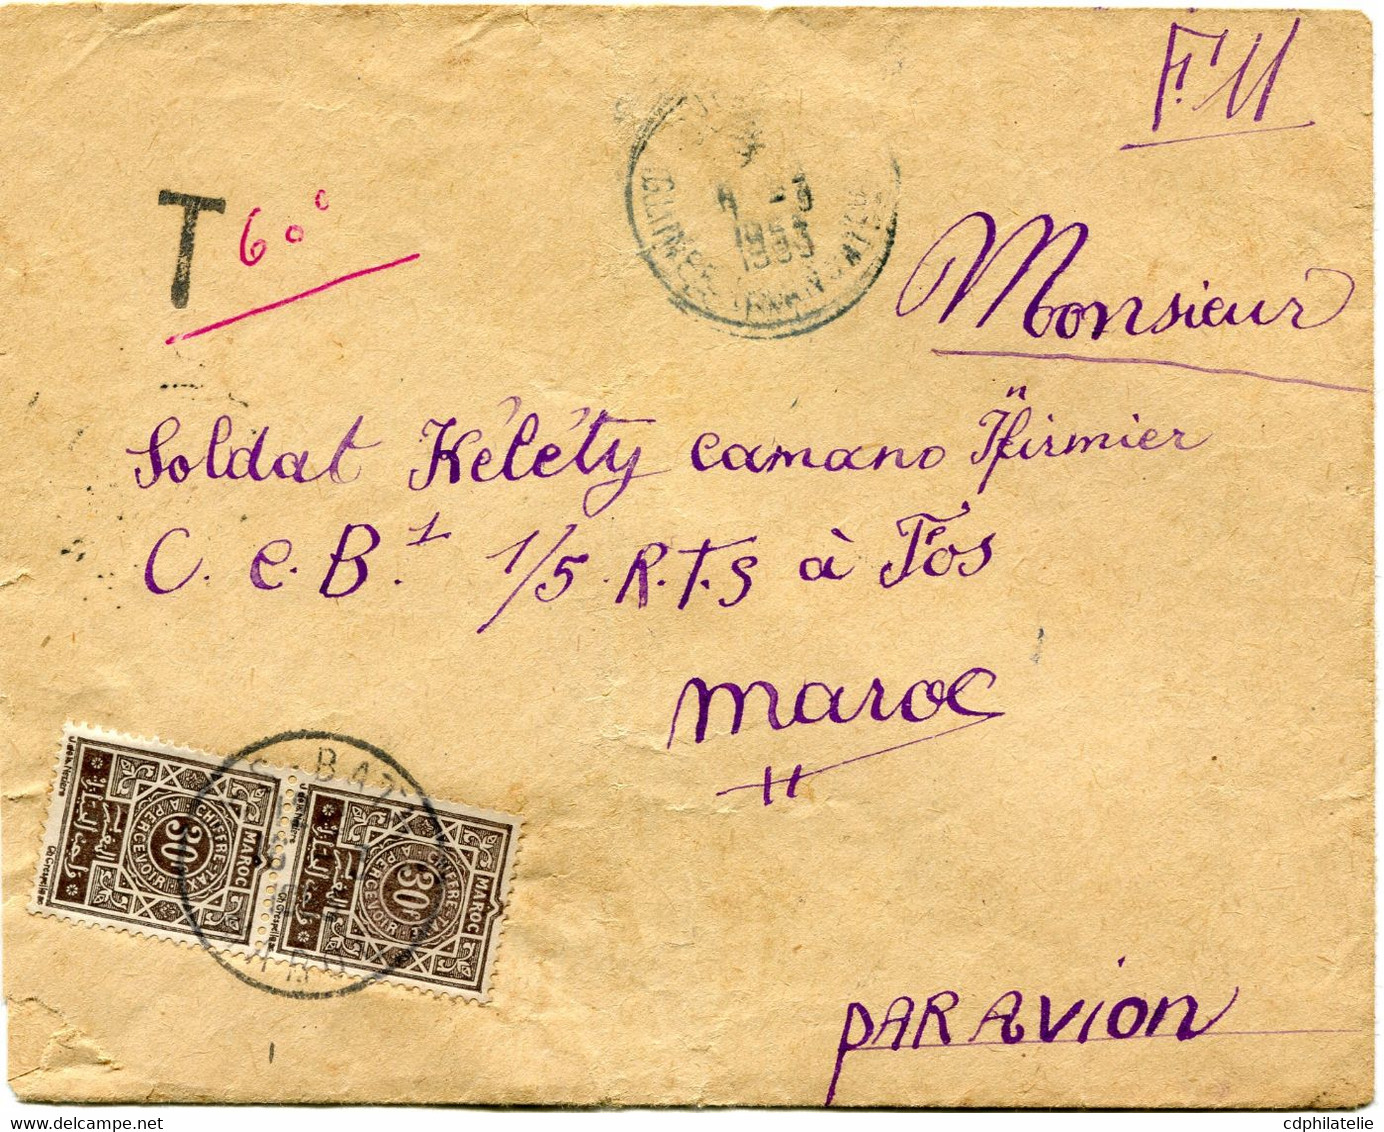 GUINEE FRANCAISE LETTRE FM DEPART KANKAN 9-3-1953 GUINEE FRANCAISE TAXEE A L'ARRIVEE AU MAROC A FES LE 13-3-1953 - Covers & Documents